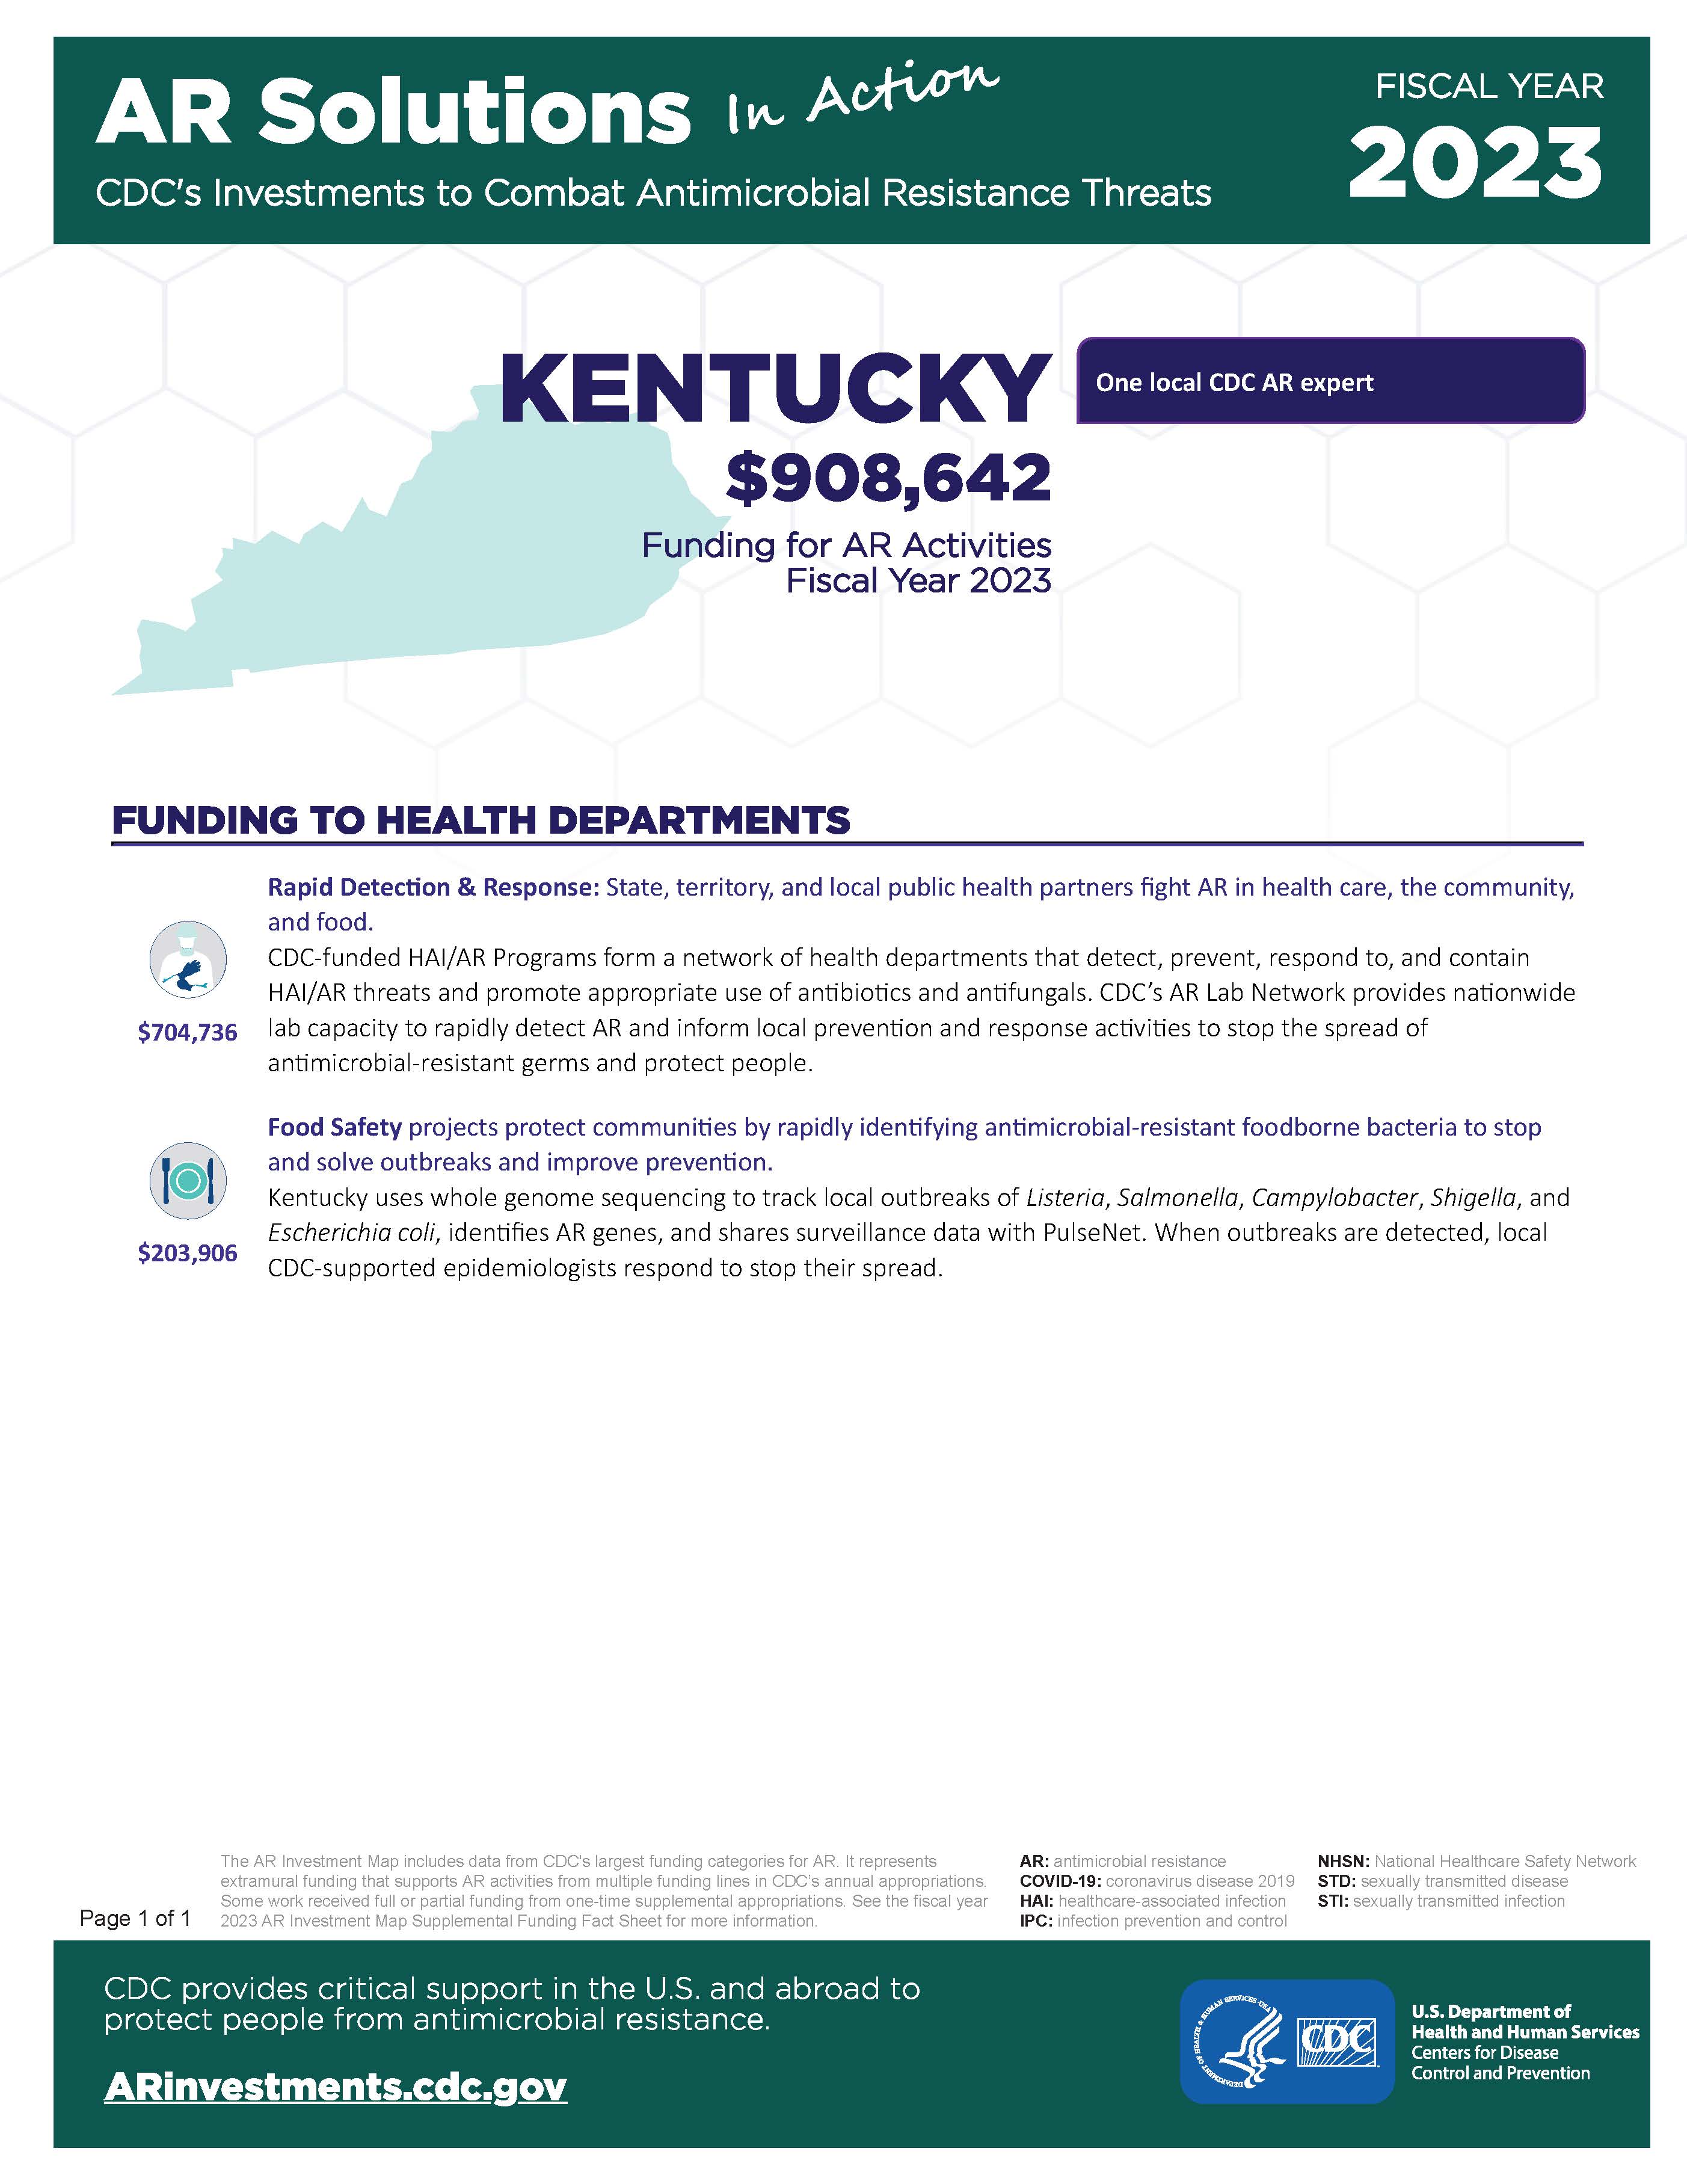 View Factsheet for Kentucky